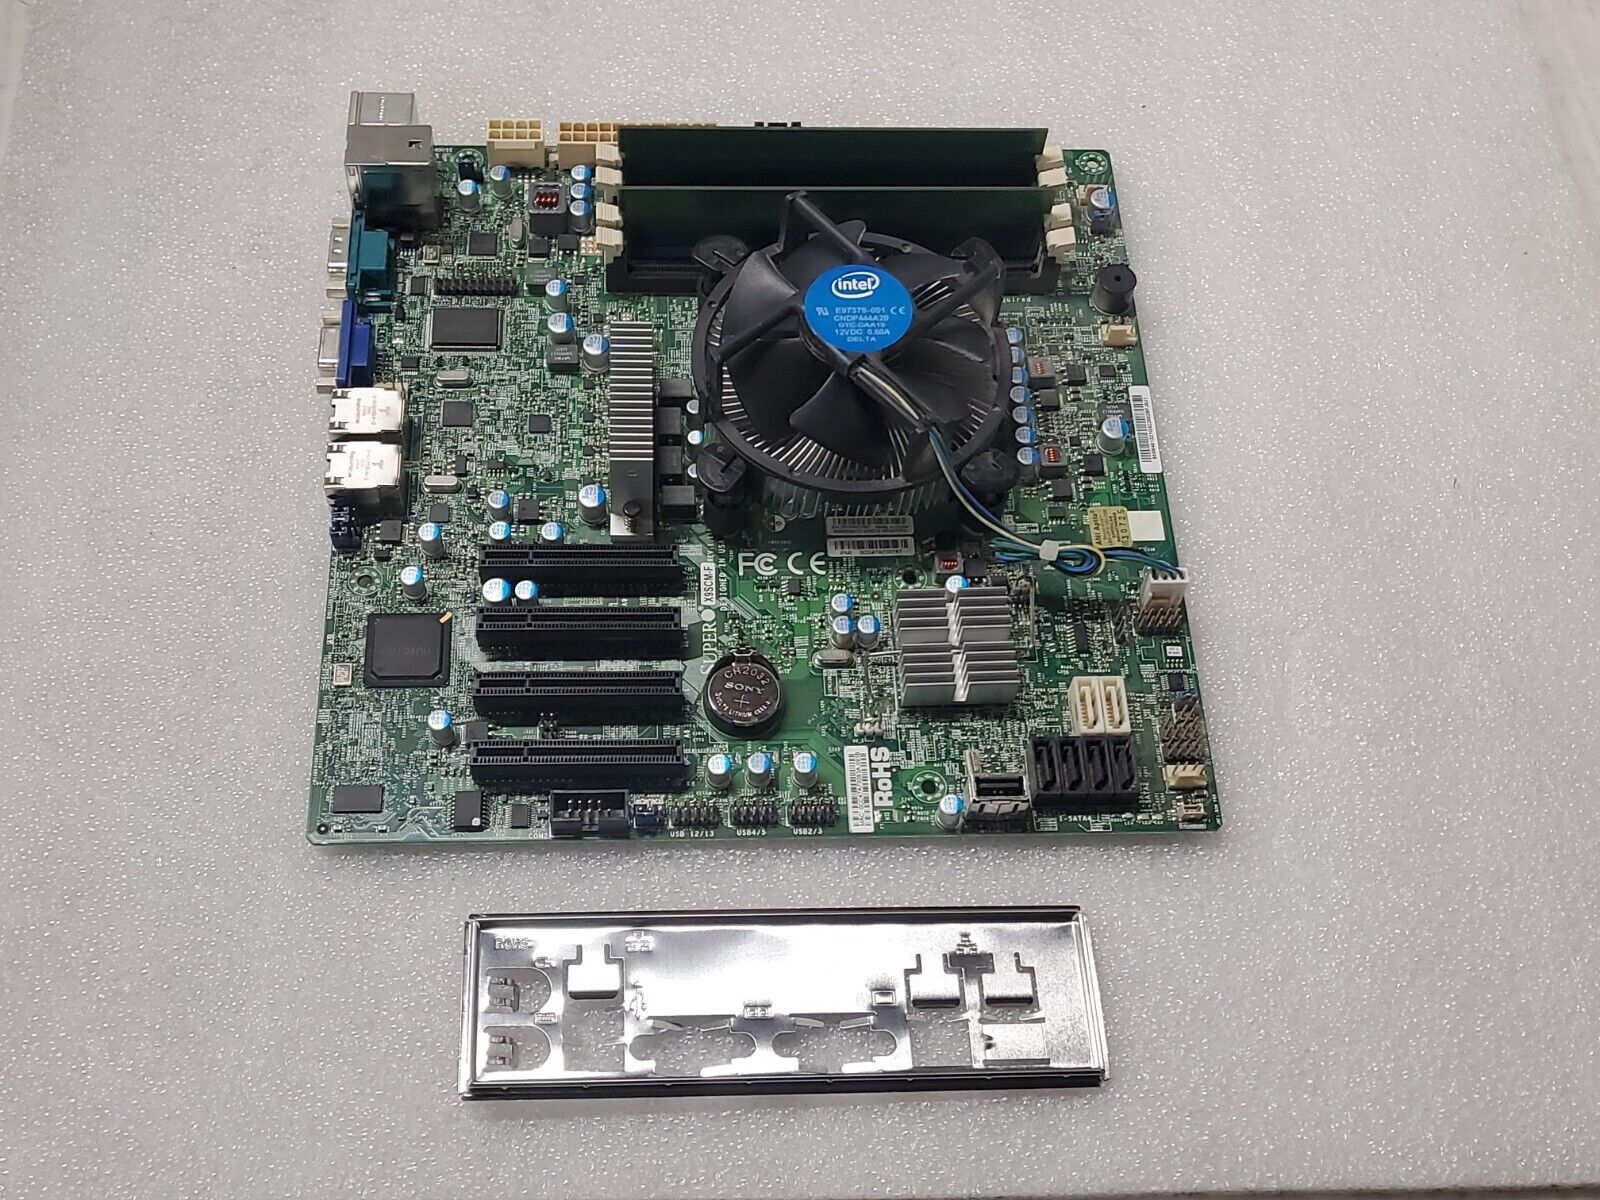 Lot of 5 Supermicro motherboard X9SCM-F, intel E3-1230v2 & 8 GB Memory Combo